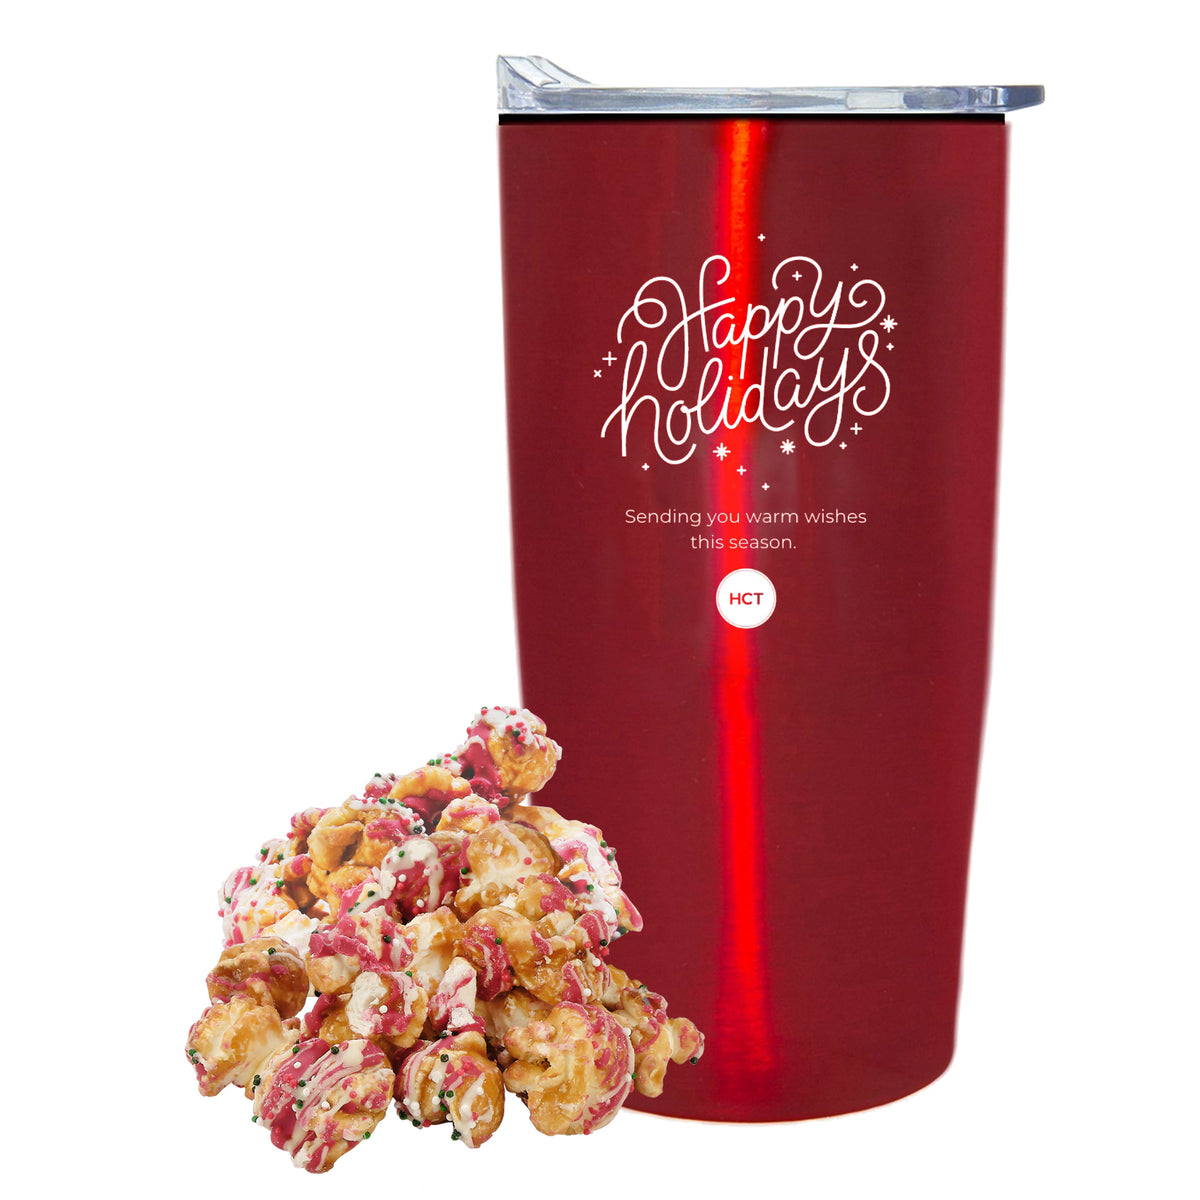 Straight Tumbler w/ Plastic Liner - 20 oz., Christmas Crunch Popcorn